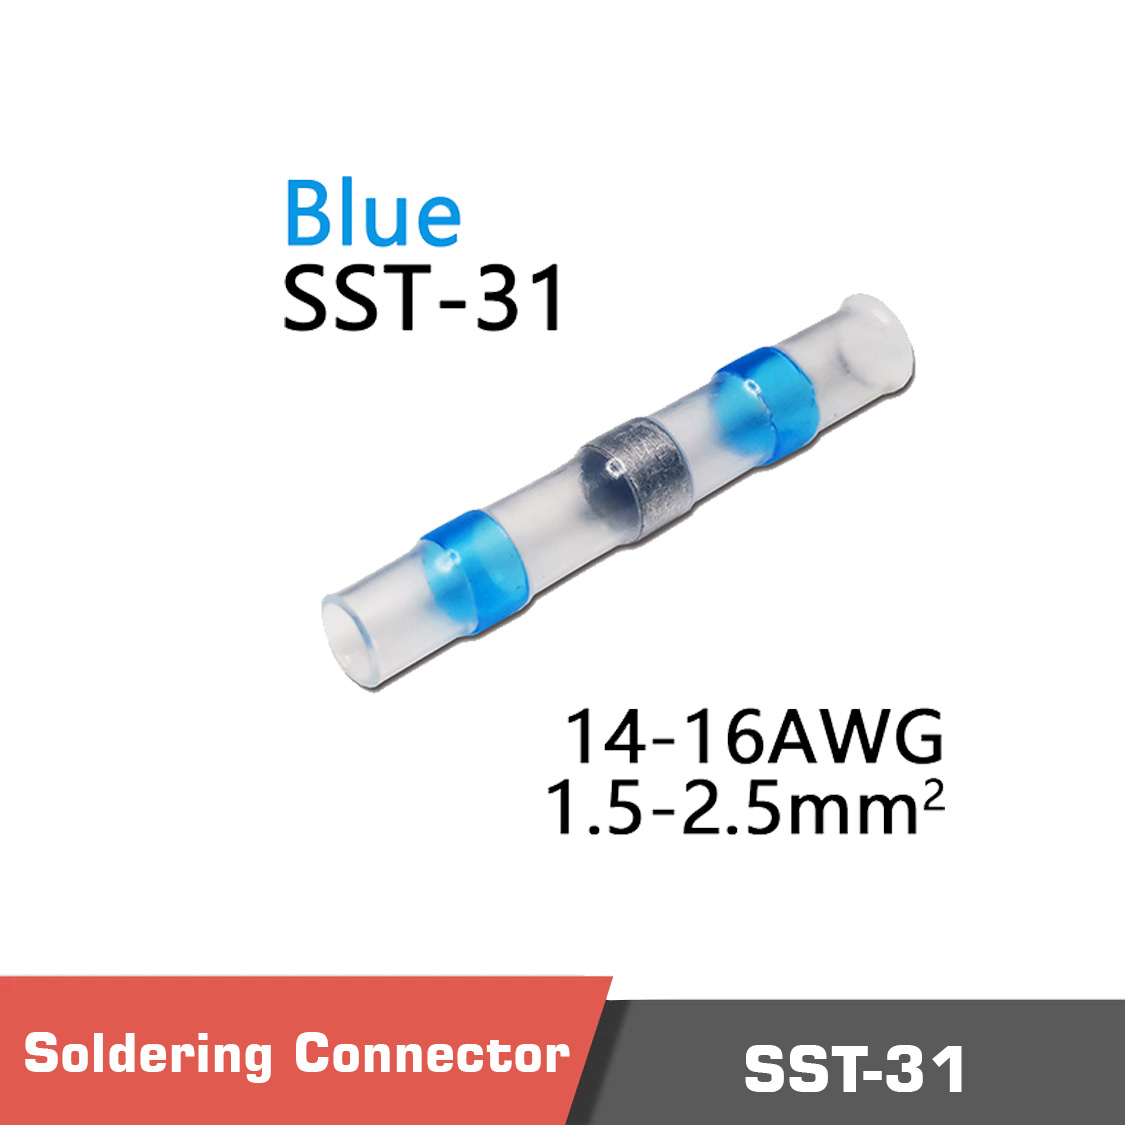 Sst 31 - sst-21, sst-21 soldering connector, soldering connector - motionew - 14